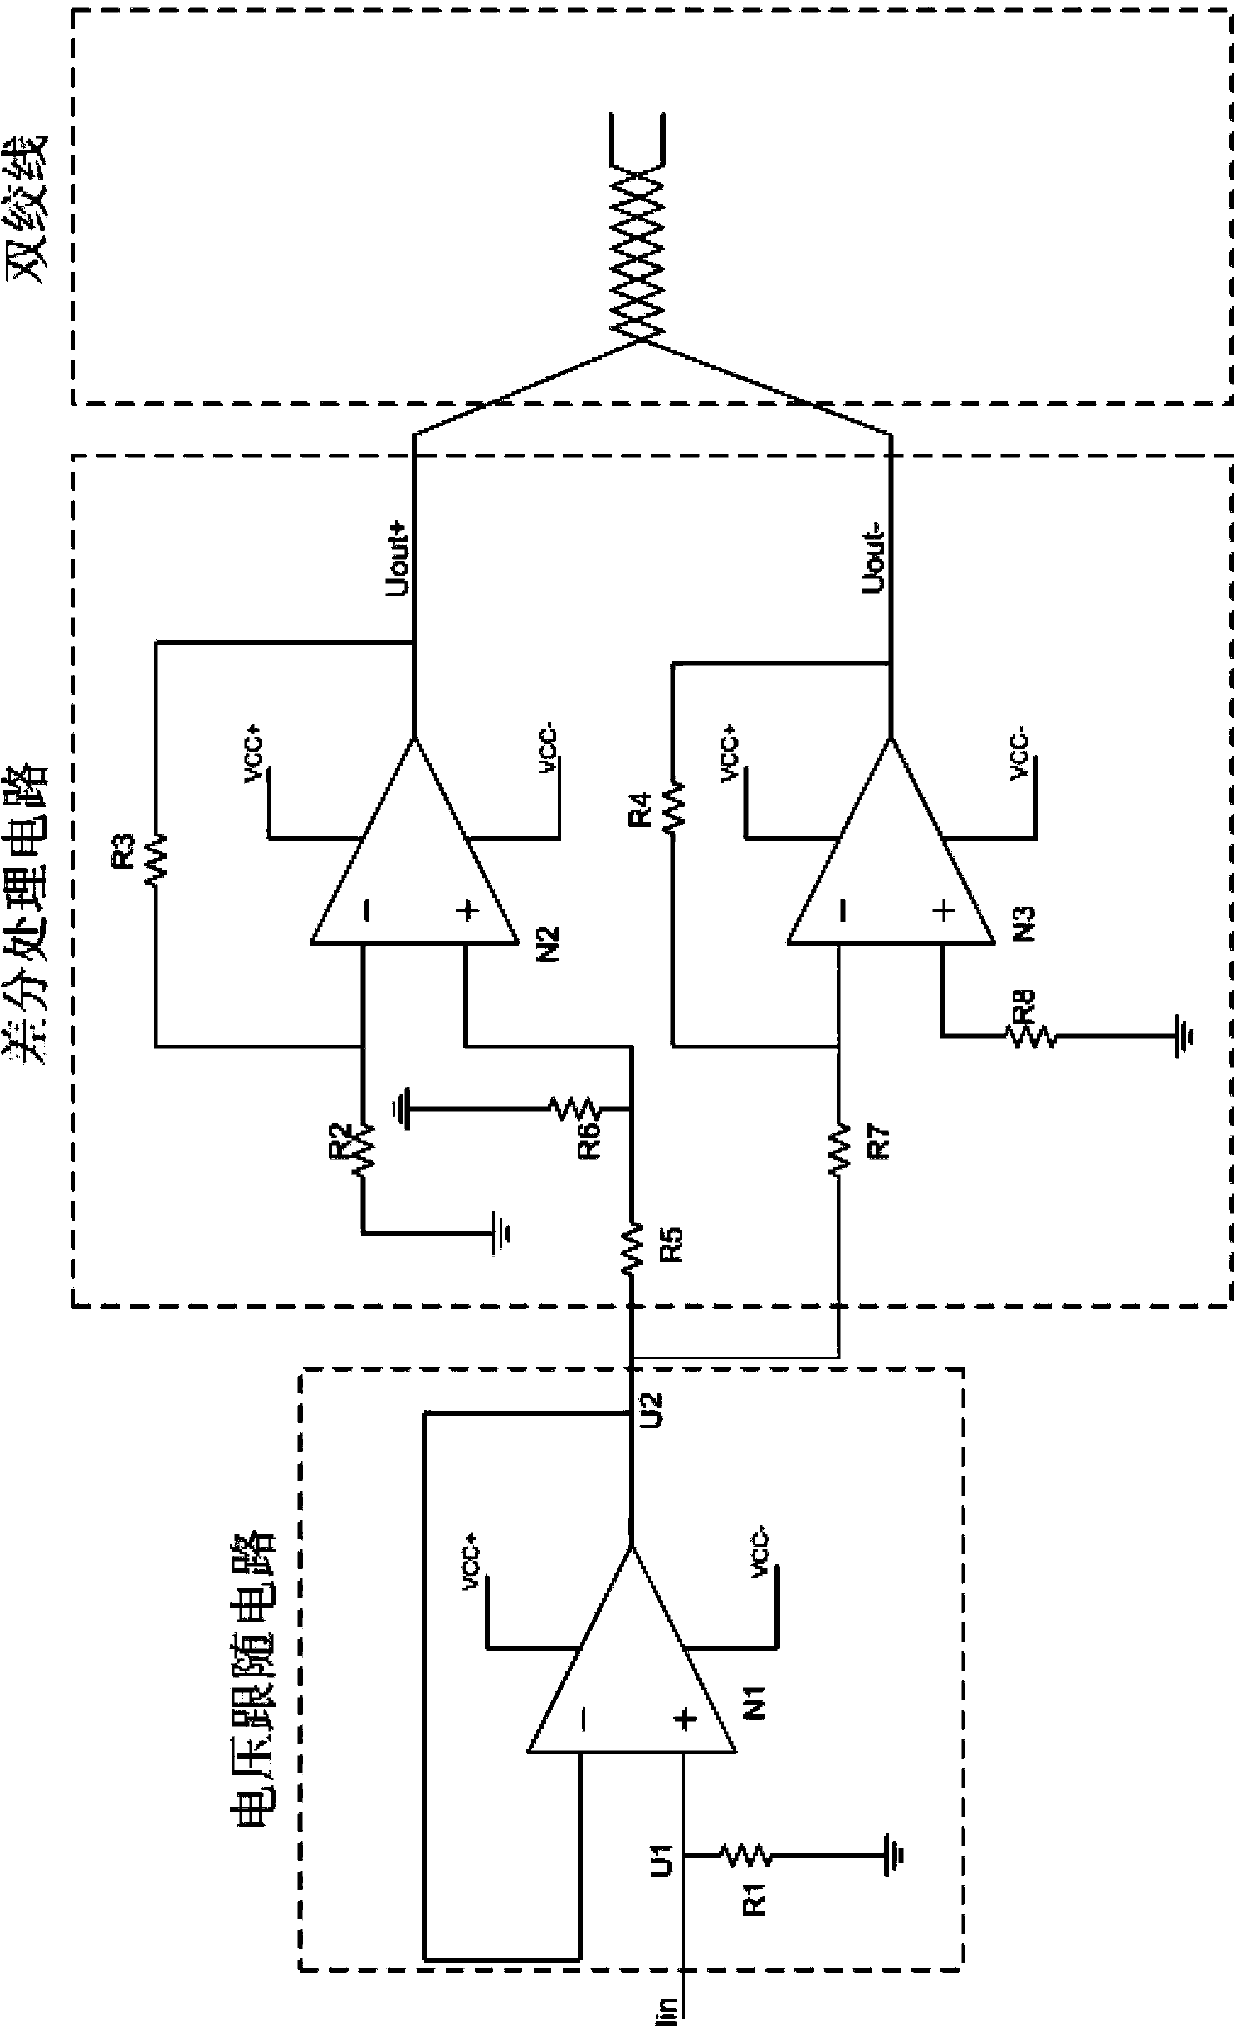 Analog accelerometer output signal transmission device